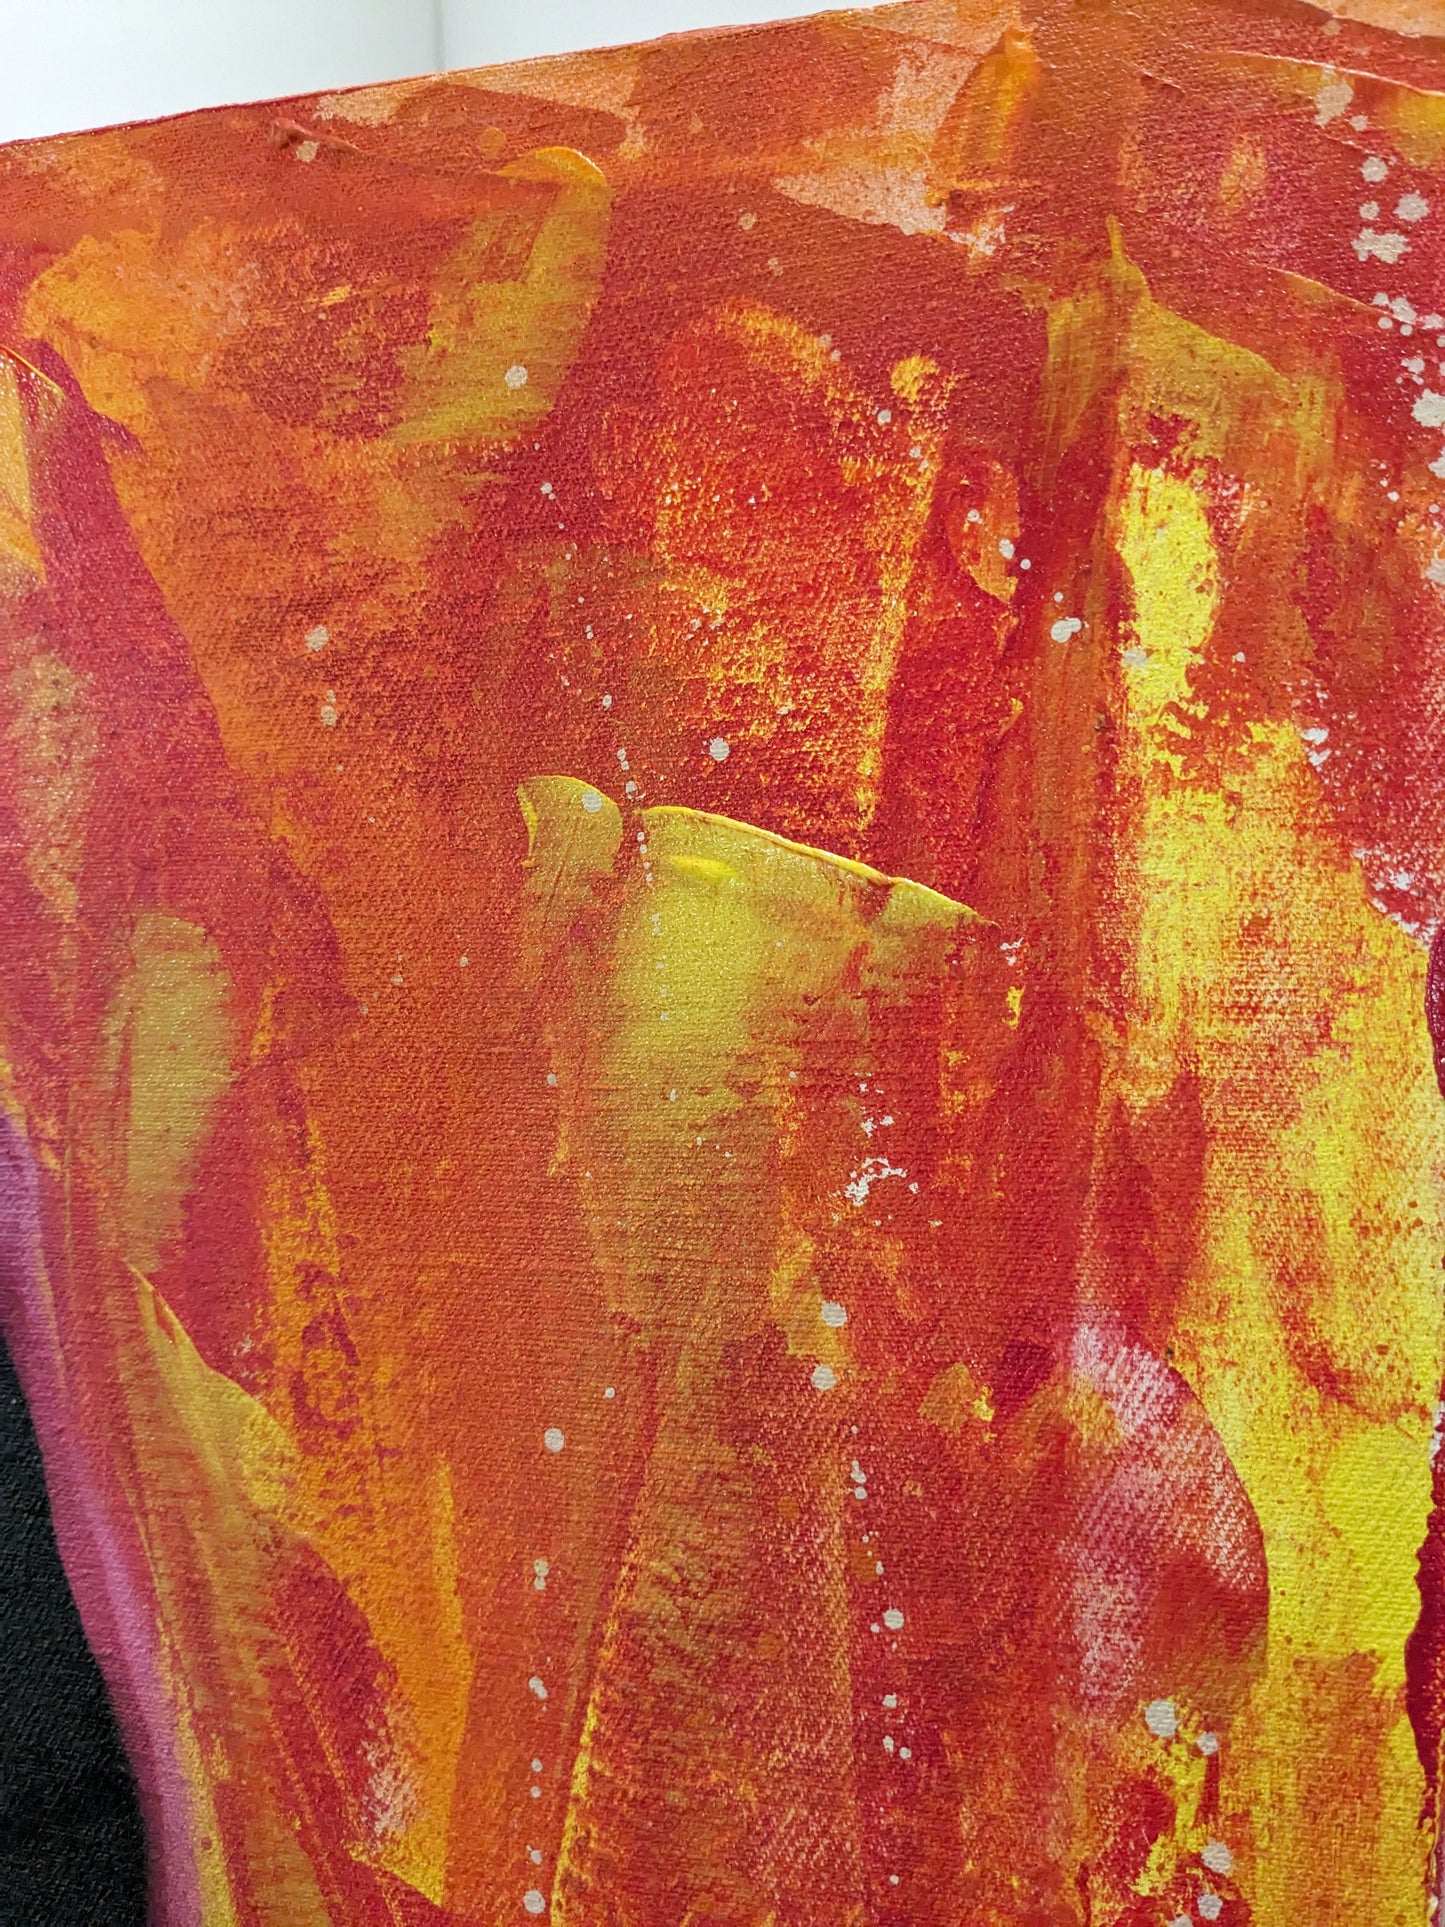 Jim Morrison "The Lizard King" Original 100cm x 100cm Mixed Media Painting